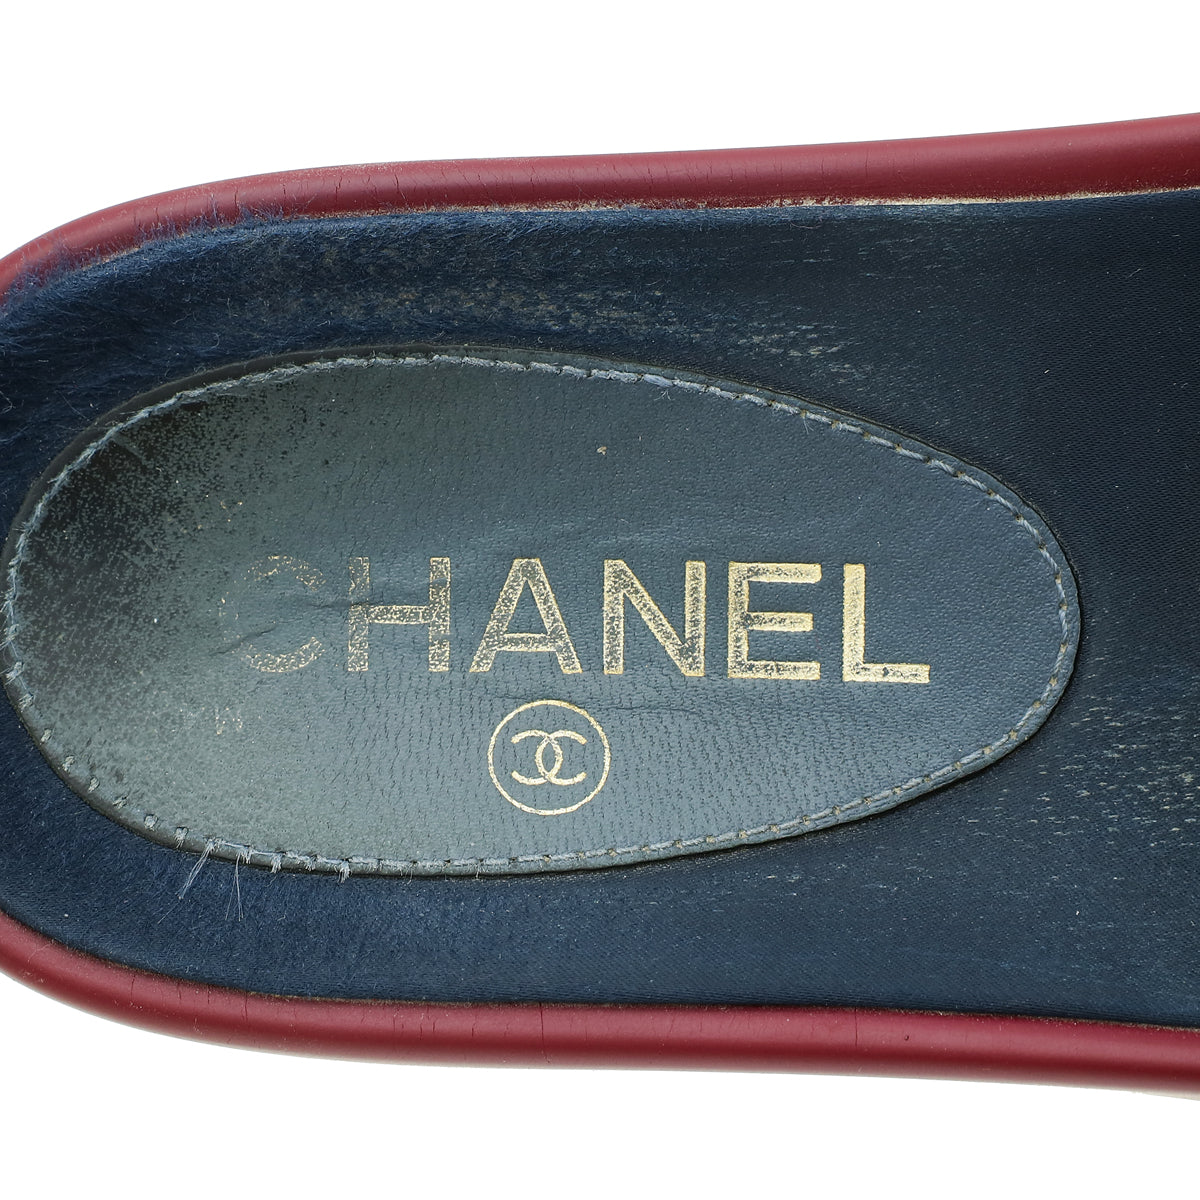 Chanel Burgundy CC Chain Slide Pool Sandal 36